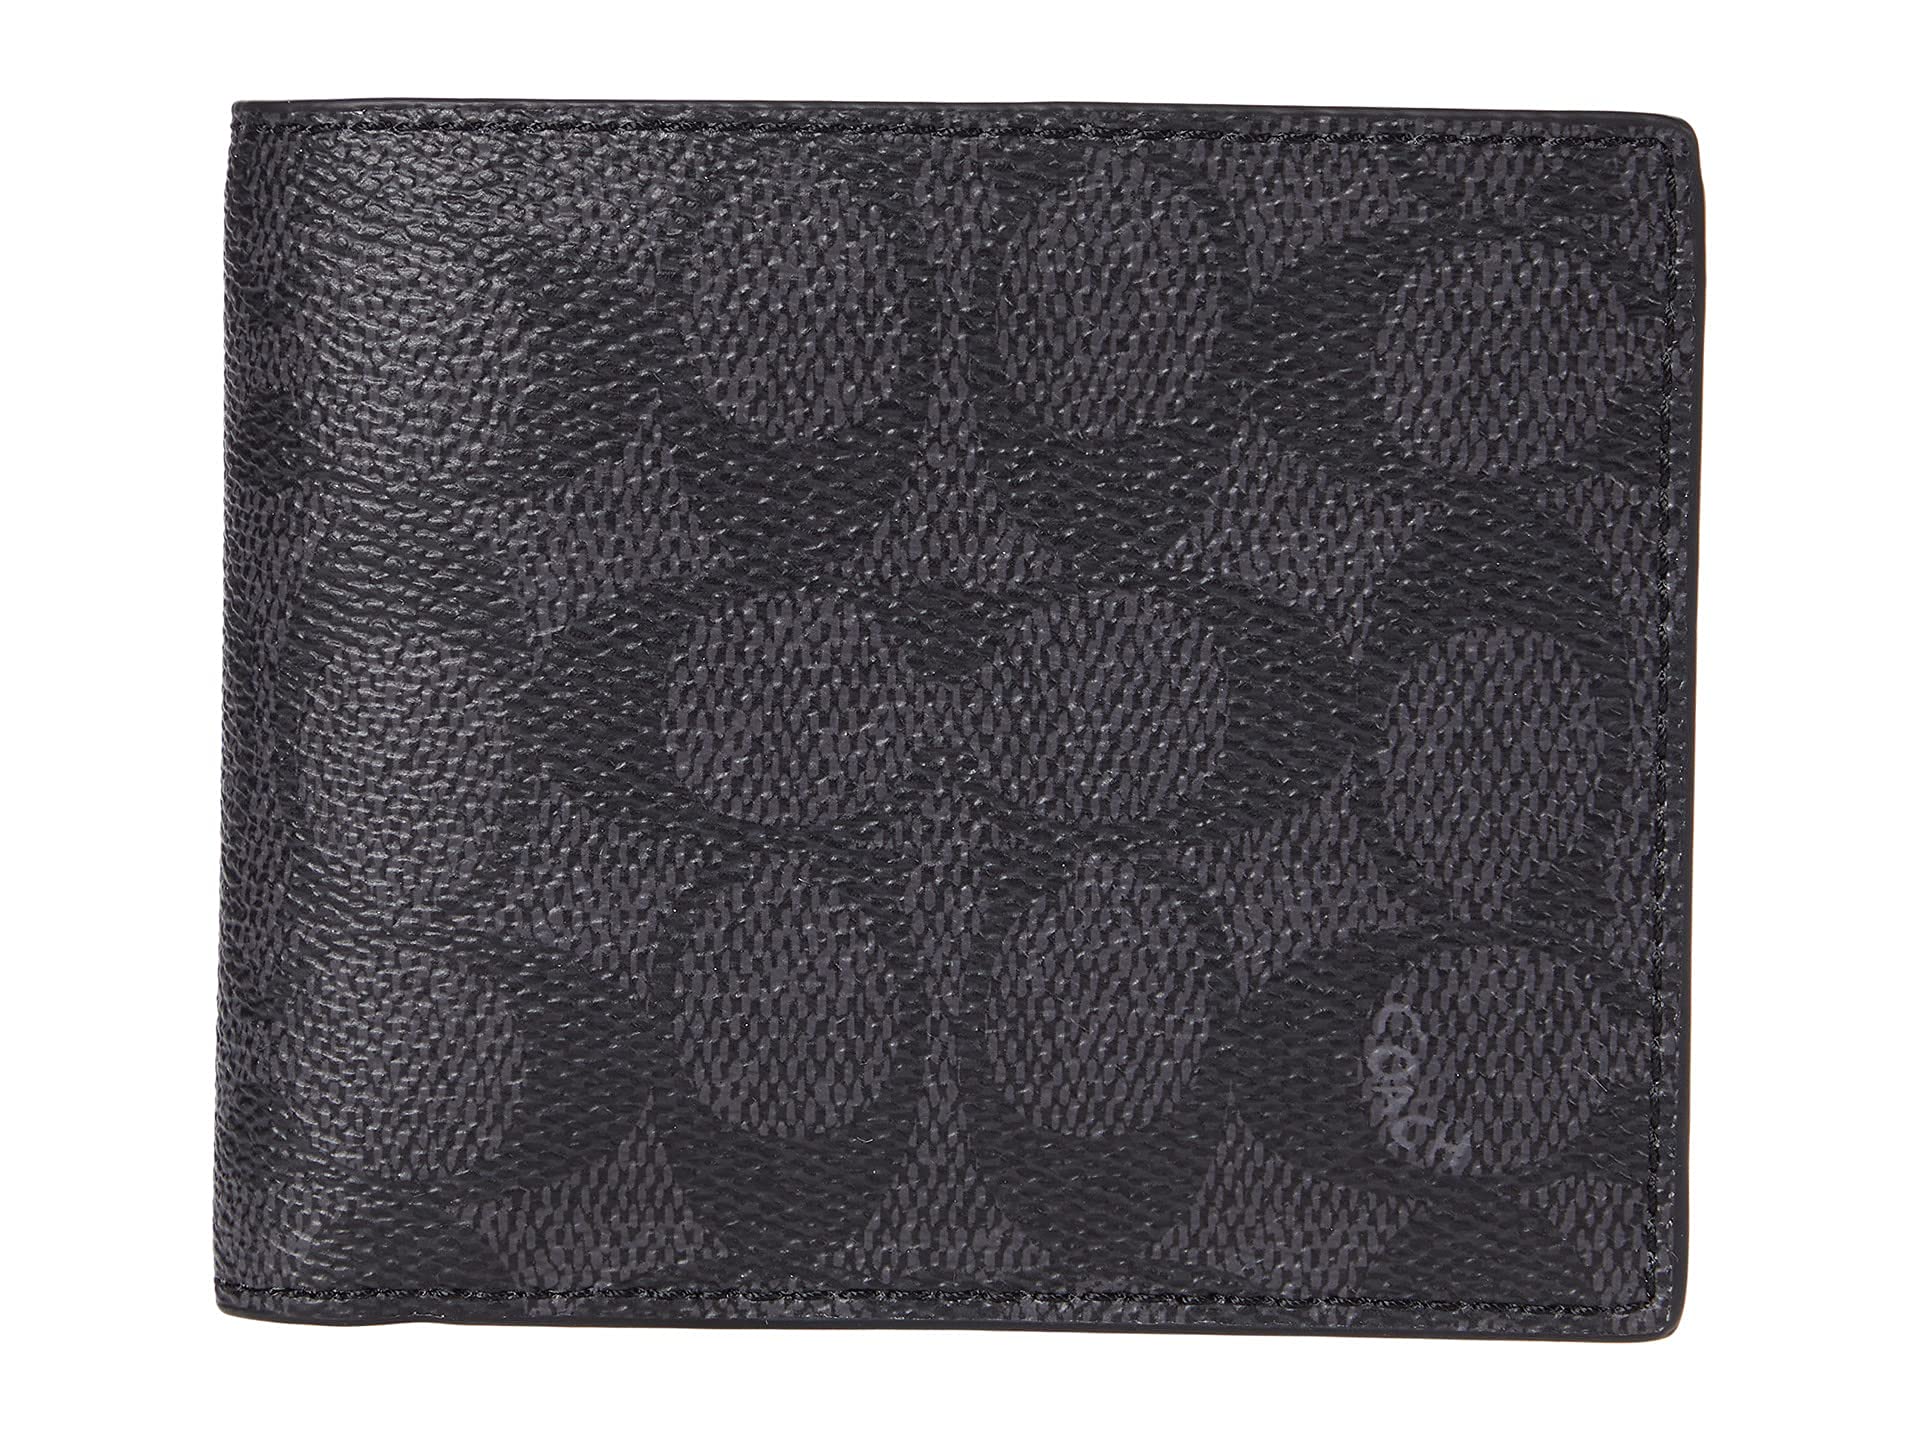 COACH Men's 3-In-1 Wallet, Charcoal/Black, One Size